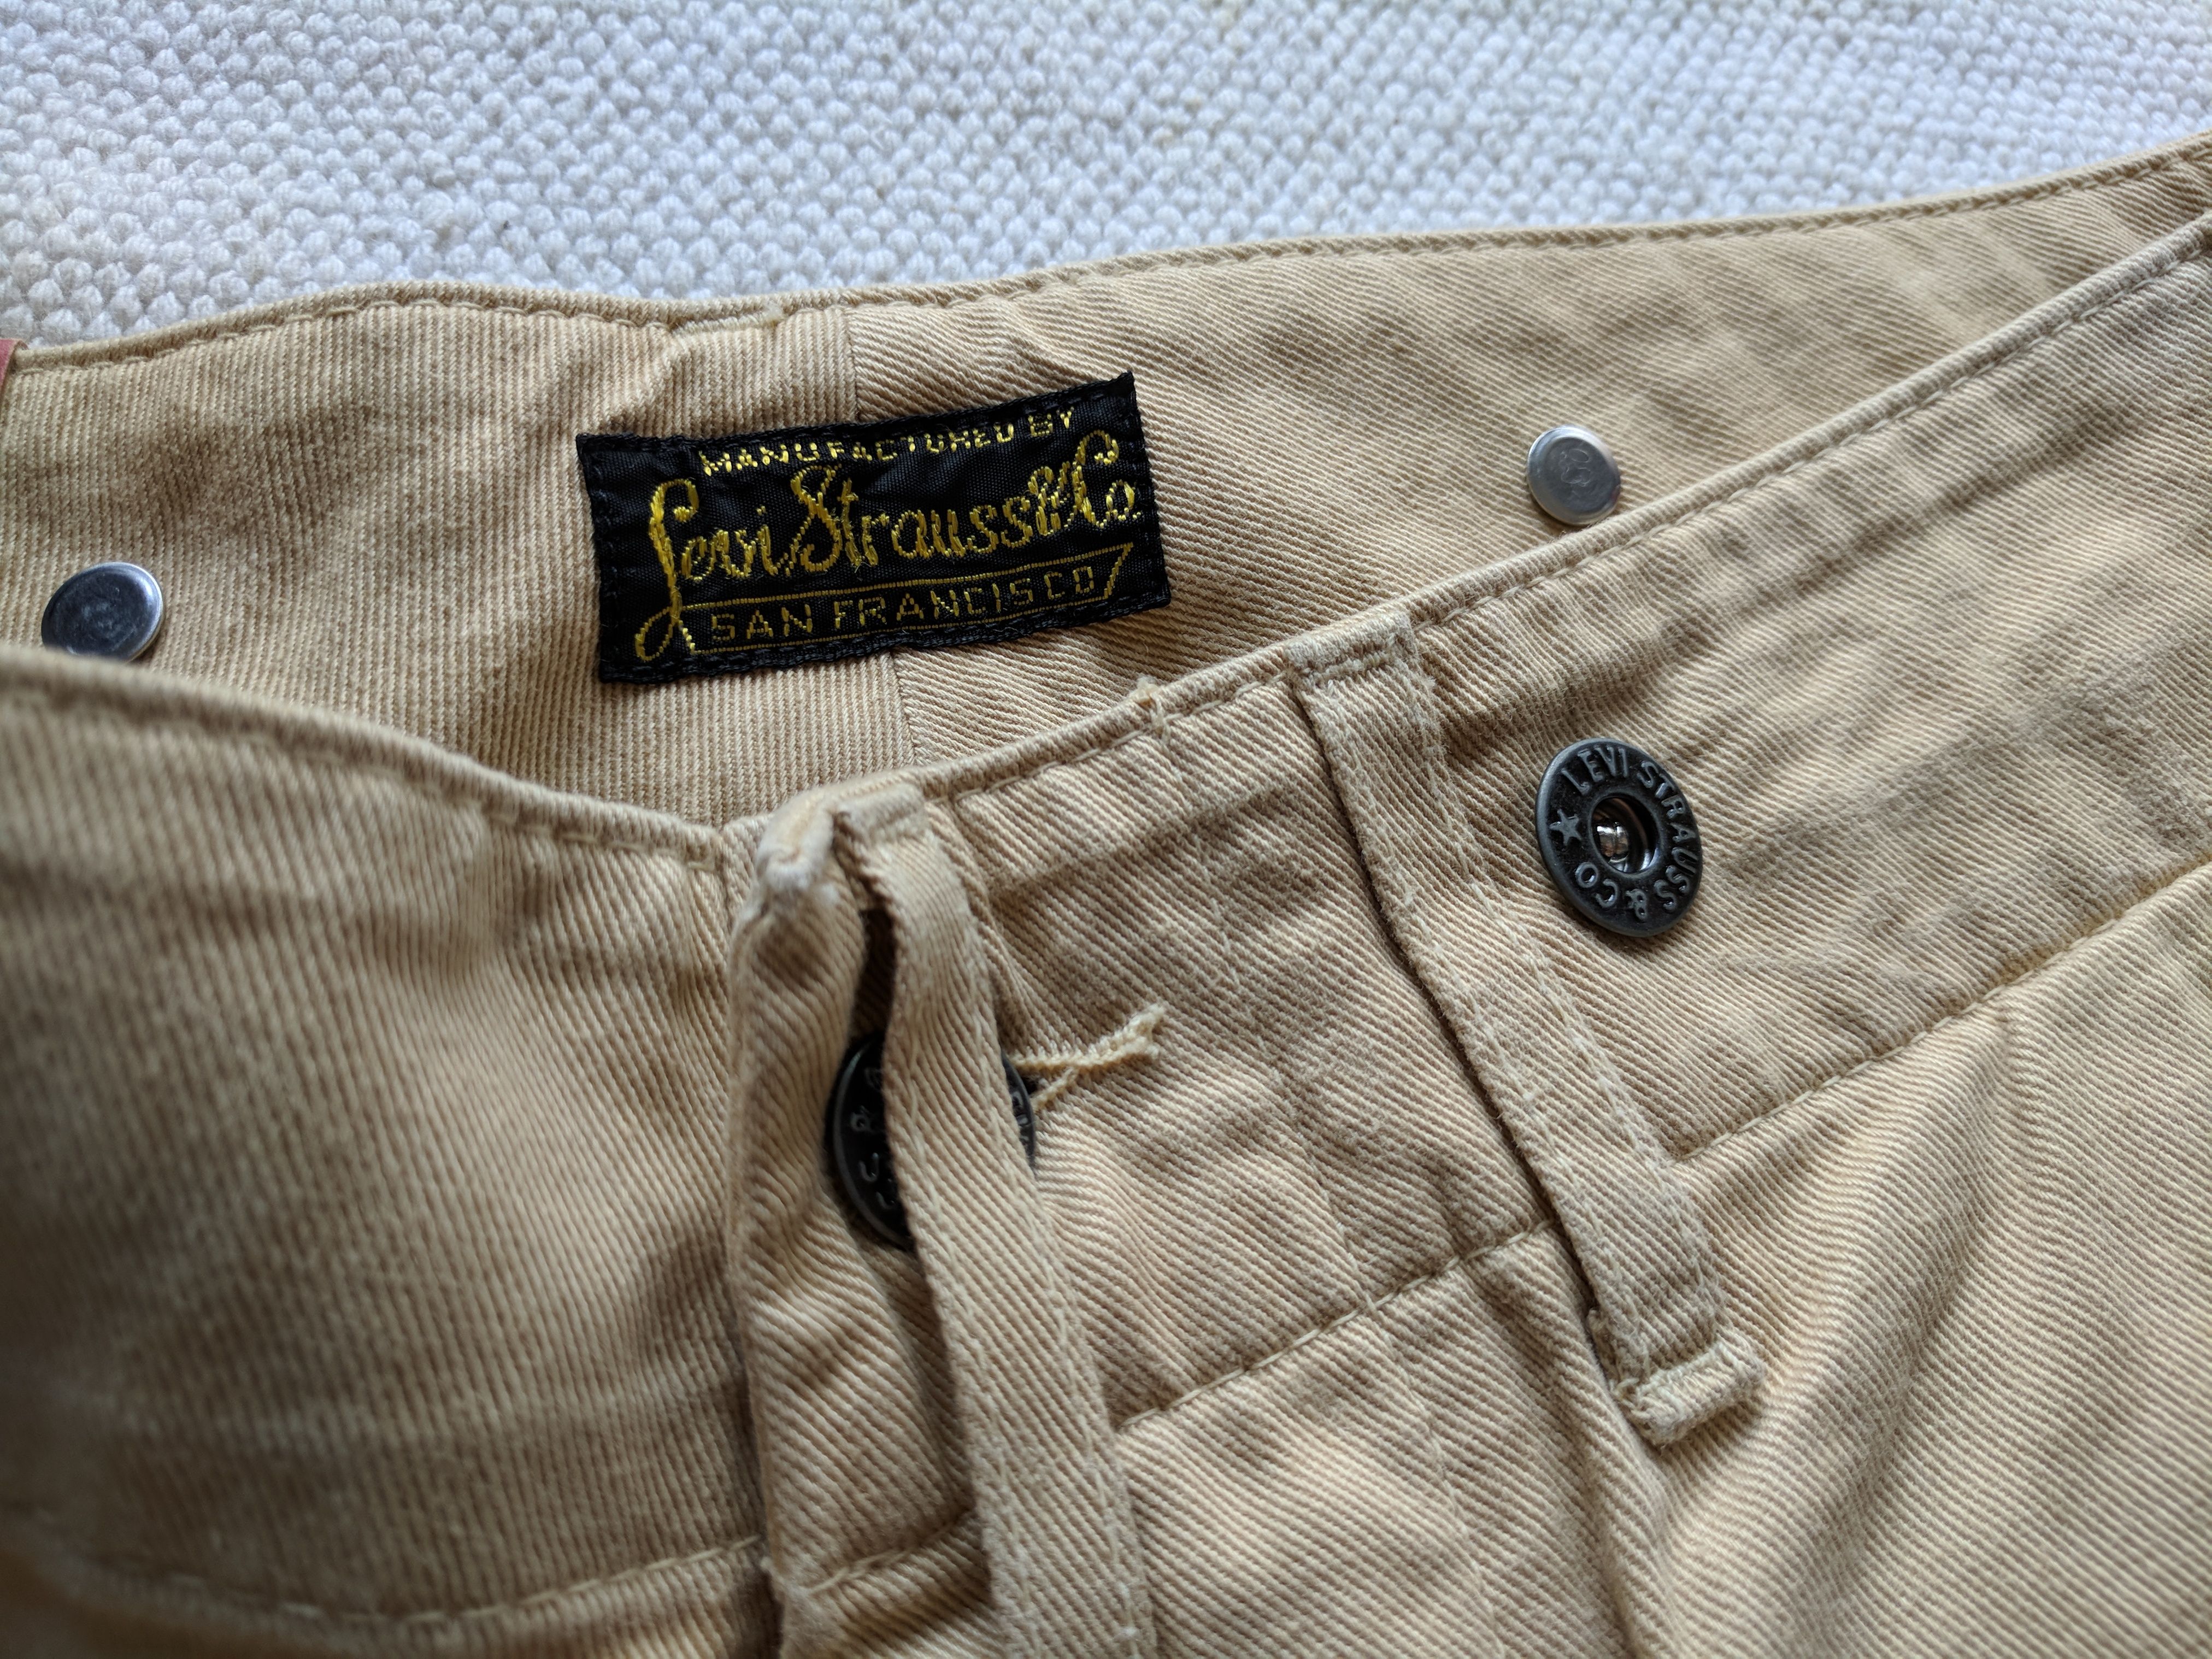 Levi's Levis LVC vintage clothing San Francisco deadstock khakis chino 1920s style pants size 29 30 Size US 29 - 5 Thumbnail